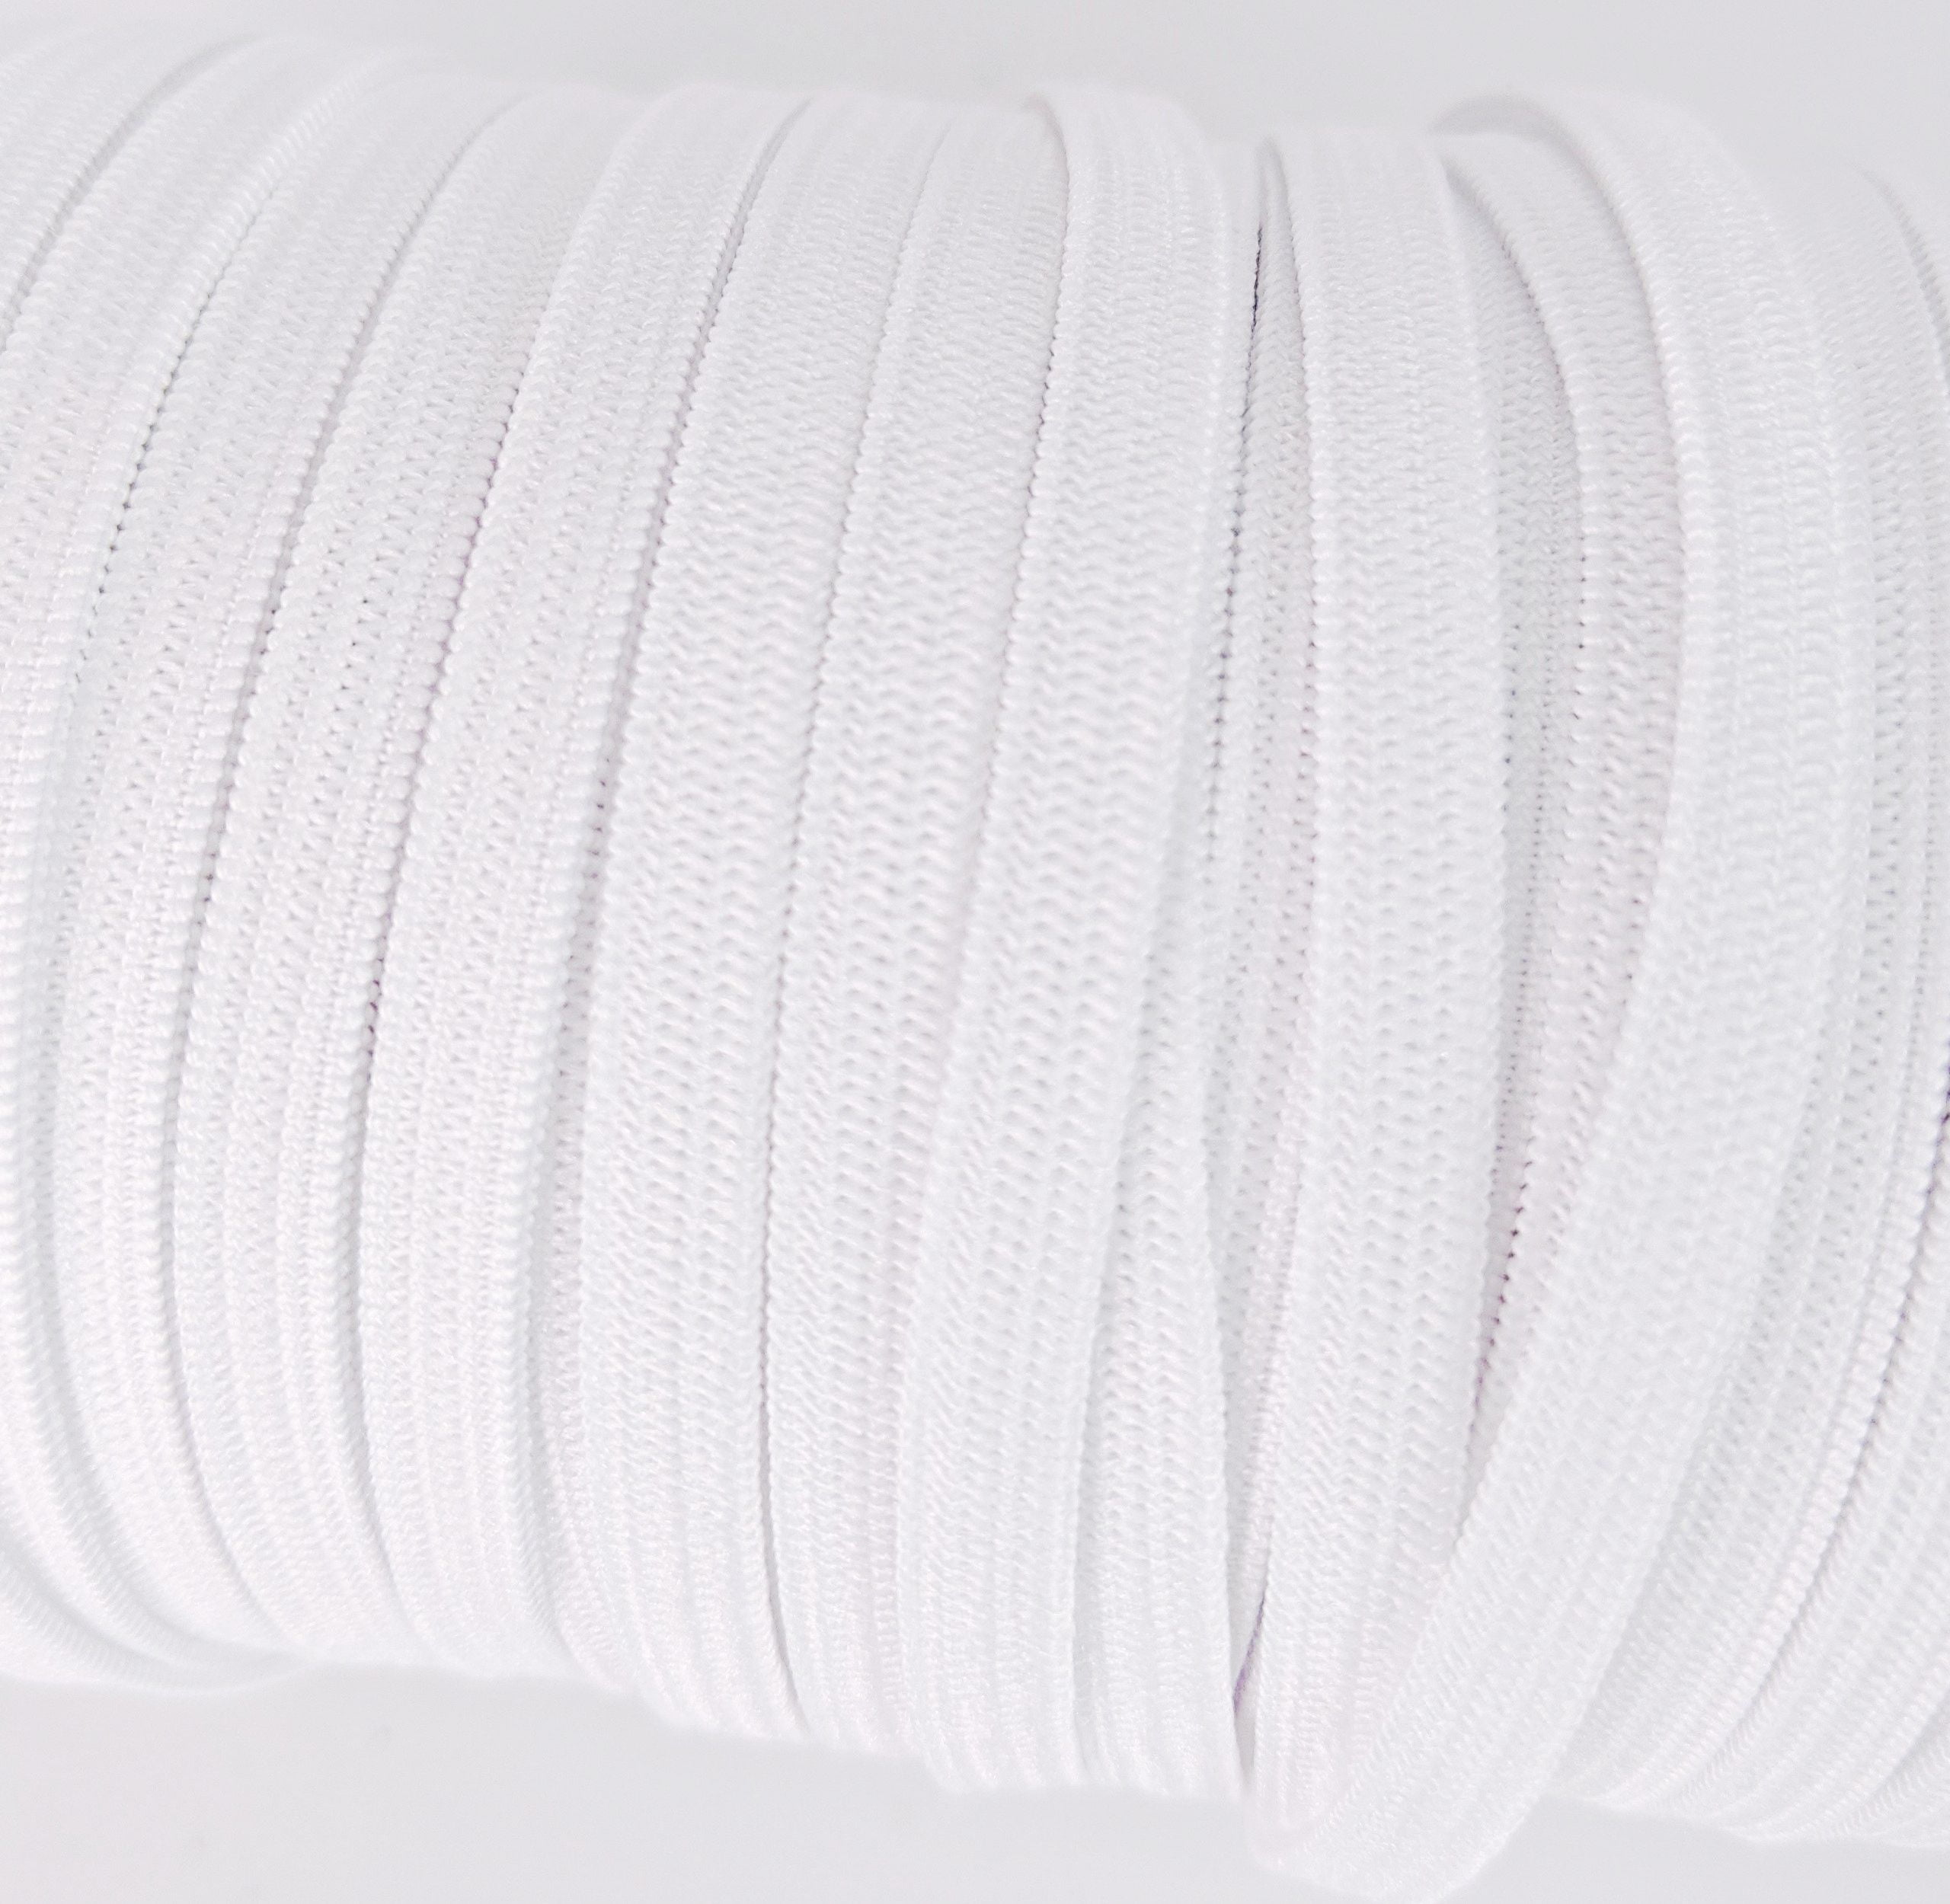 Elastic Band-White 120-Yards Length 1/4 Width Braided Elastic Cord/Elastic Band/Elastic Rope/Bungee/White Heavy Stretch Knit Elastic Spool 